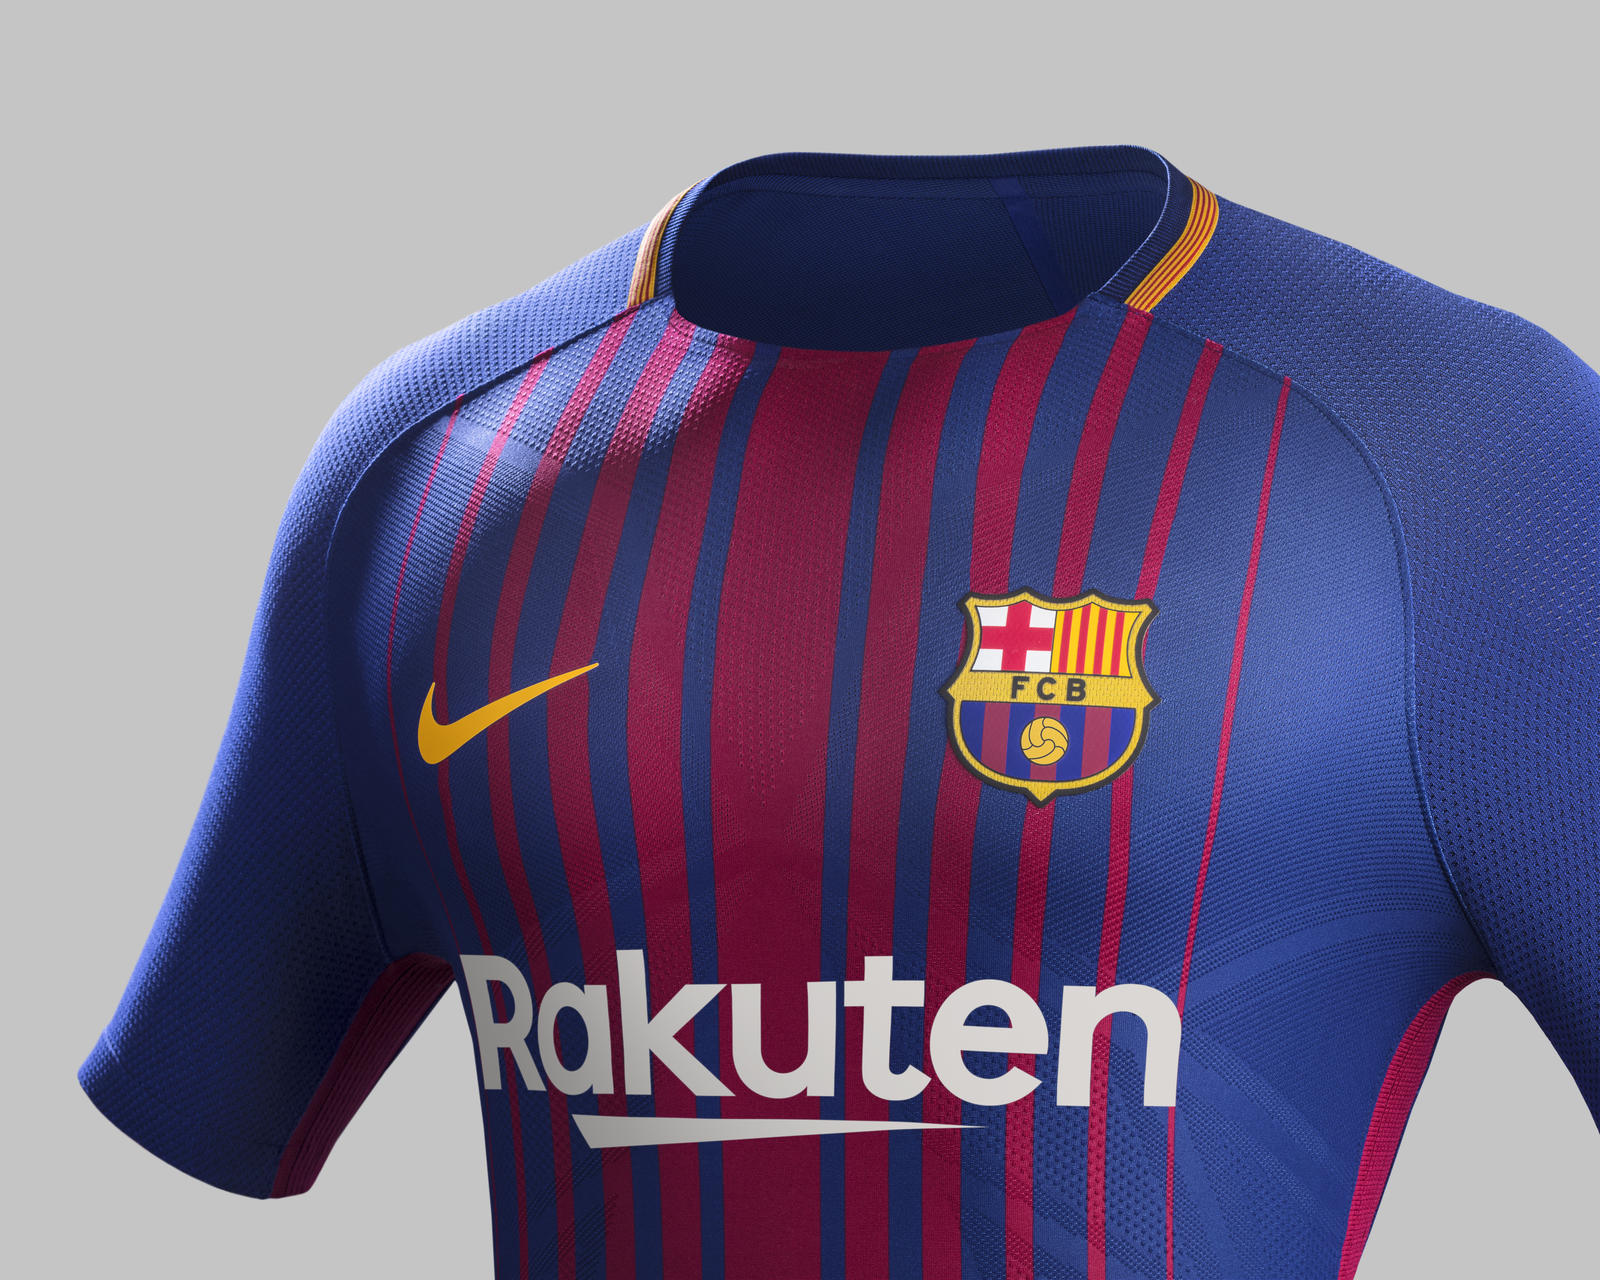 Voorkomen pack Ringlet Barcelona thuisshirt 2017-2018 - Voetbalshirts.com